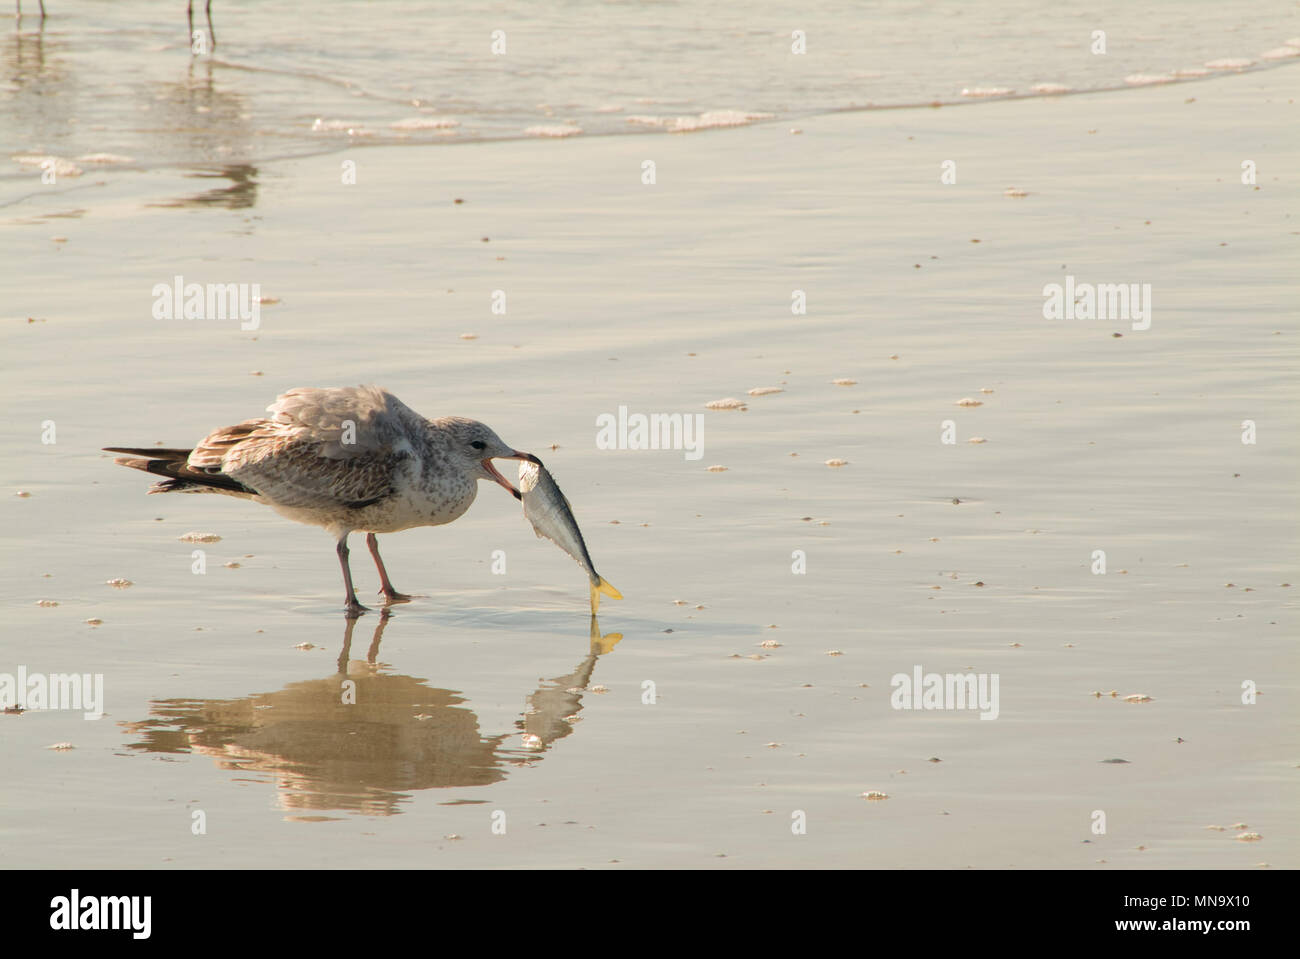 Seagull eating fish on beach in Cocoa Beach Florida beach Stock Photo